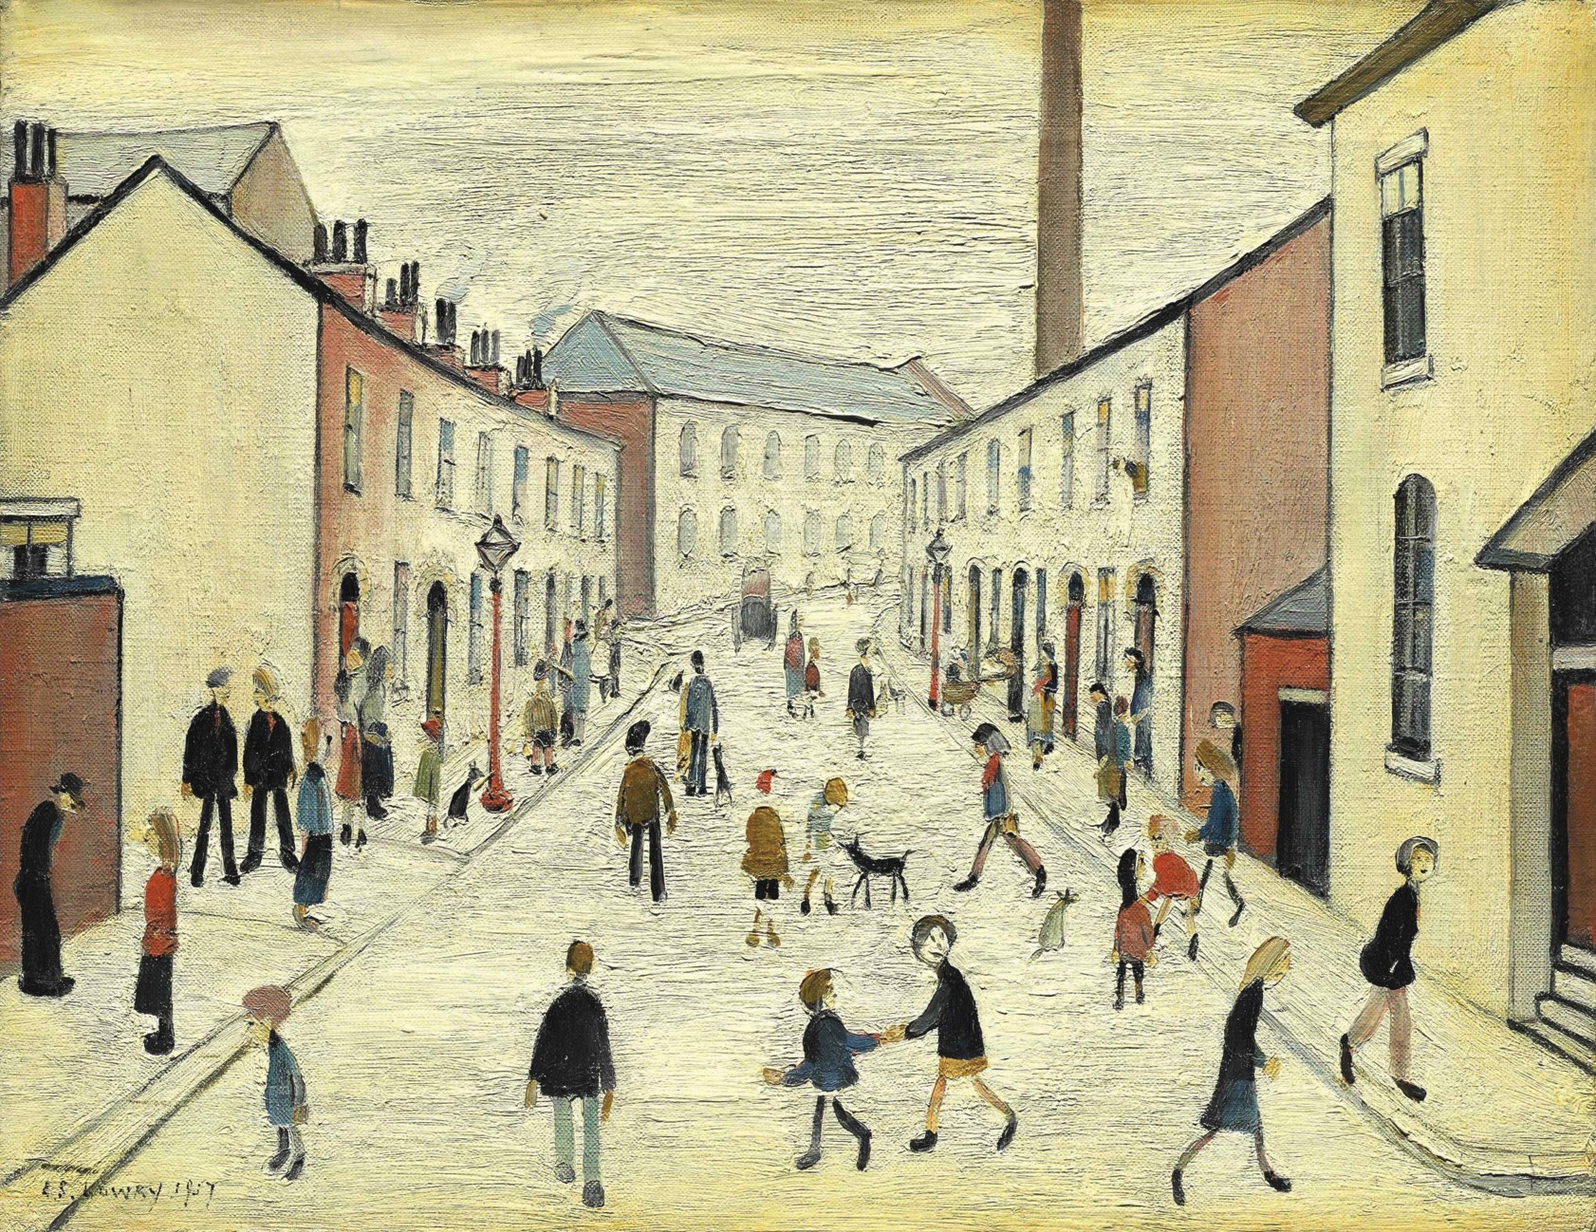 Coronation Street (1957) by Laurence Stephen Lowry (1887 - 1976), English artist.